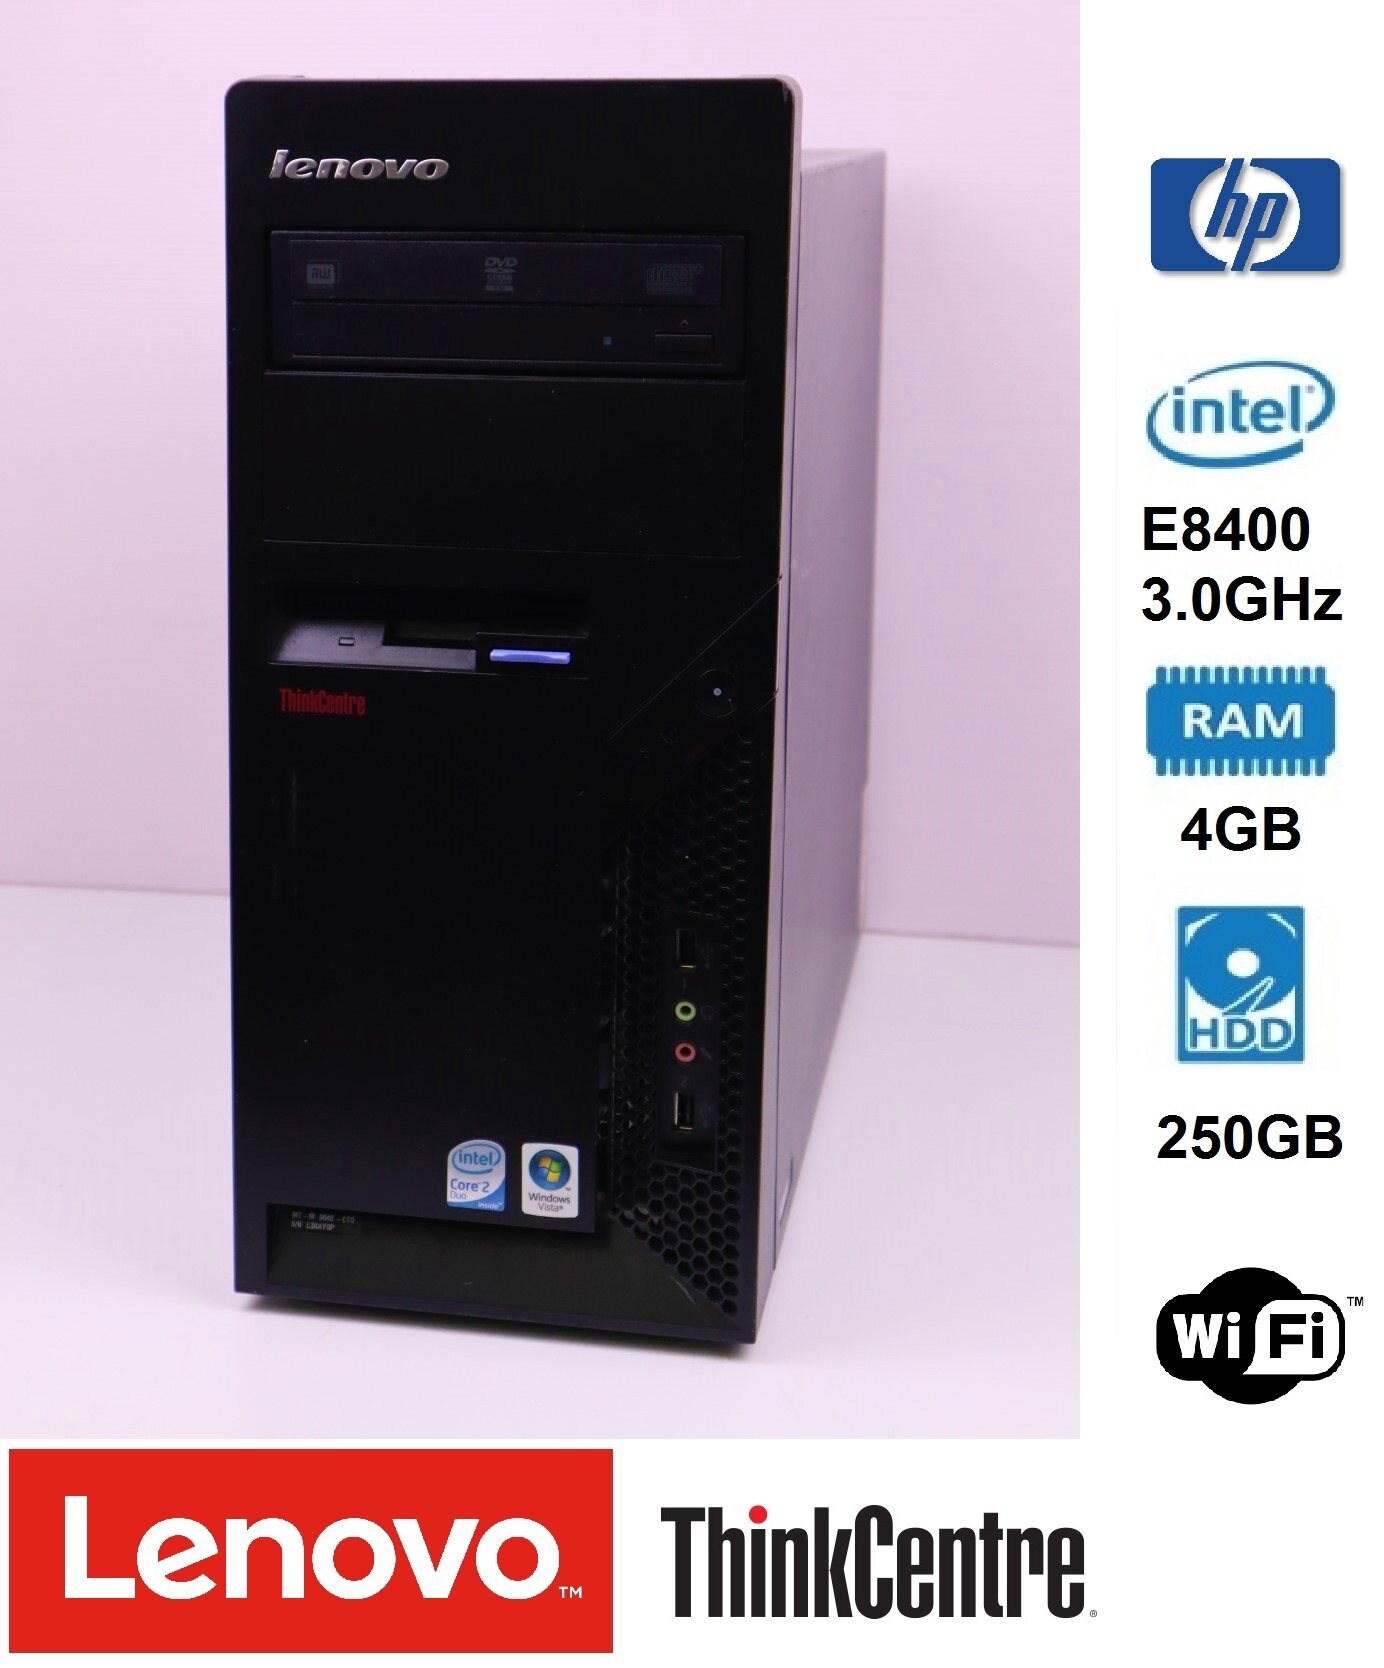 Lenovo ThinkCentre เคสใหญ่ Intel Core2 Duo E8400 @3.00GHz -RAM 4GB -HDD 250GB -Wi-Fi